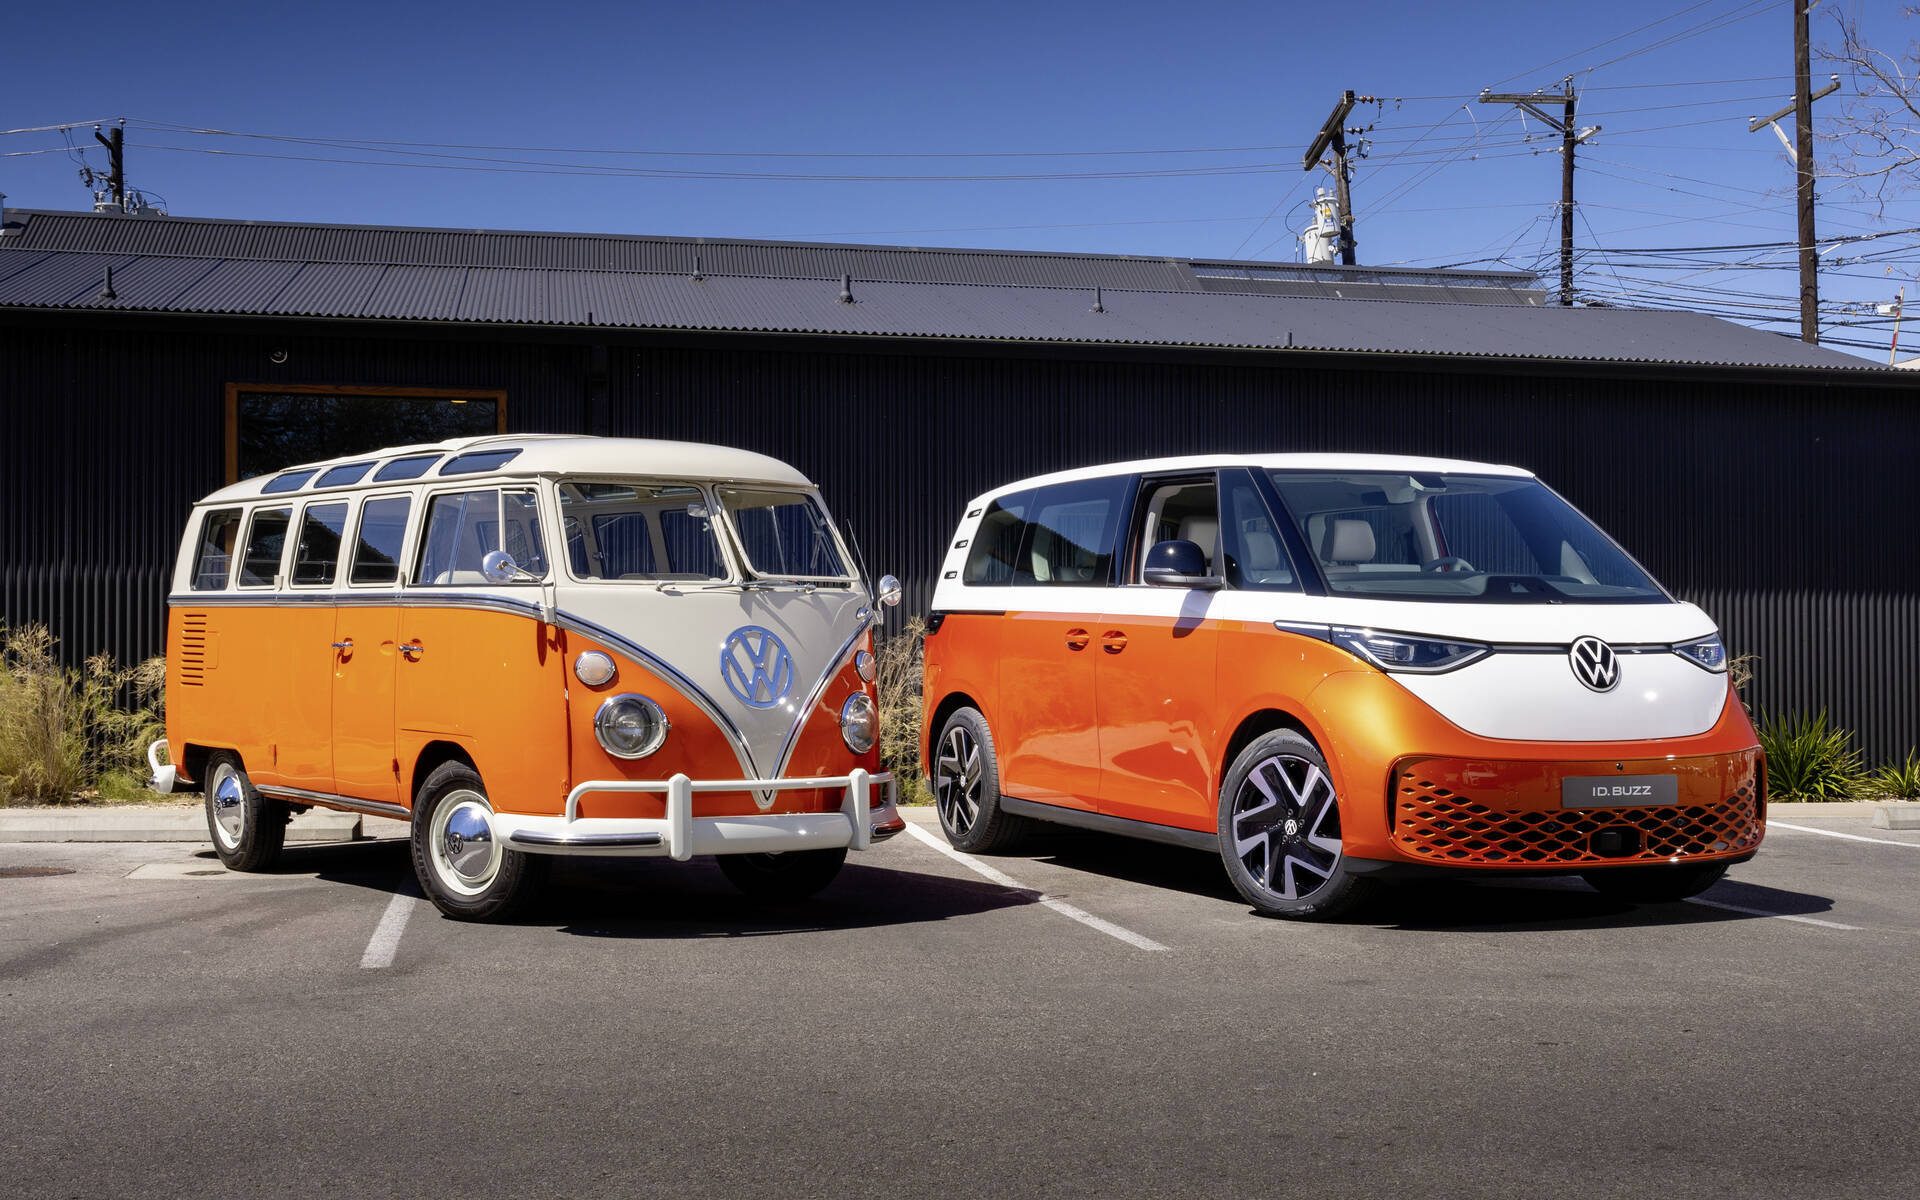 Volkswagen Debuts Electric ID. Buzz Bus